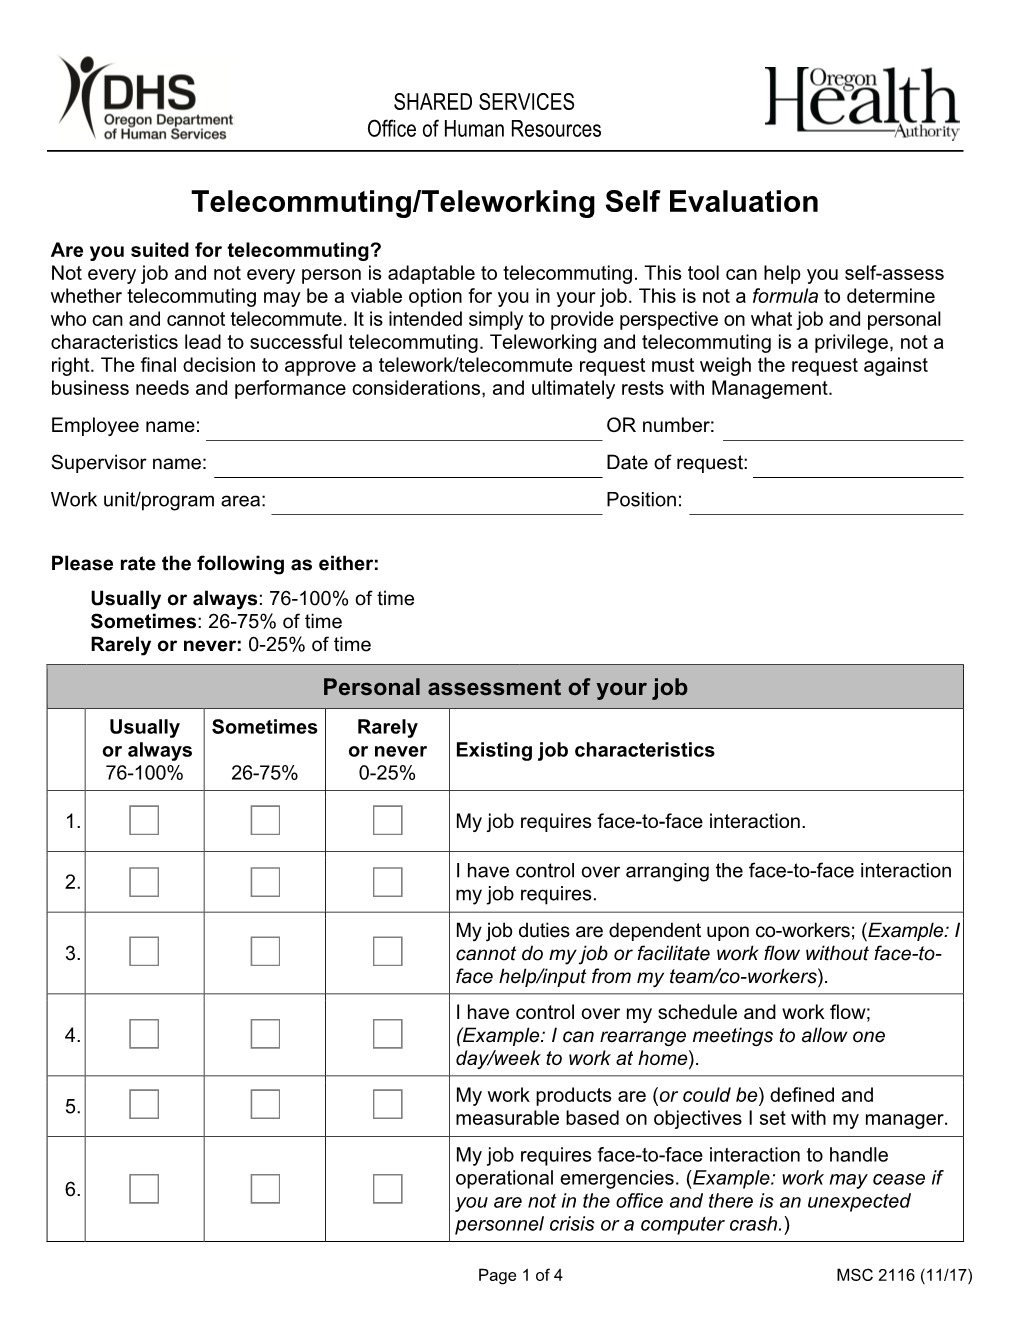 MSC 2116 Telecommuting/Teleworking Self